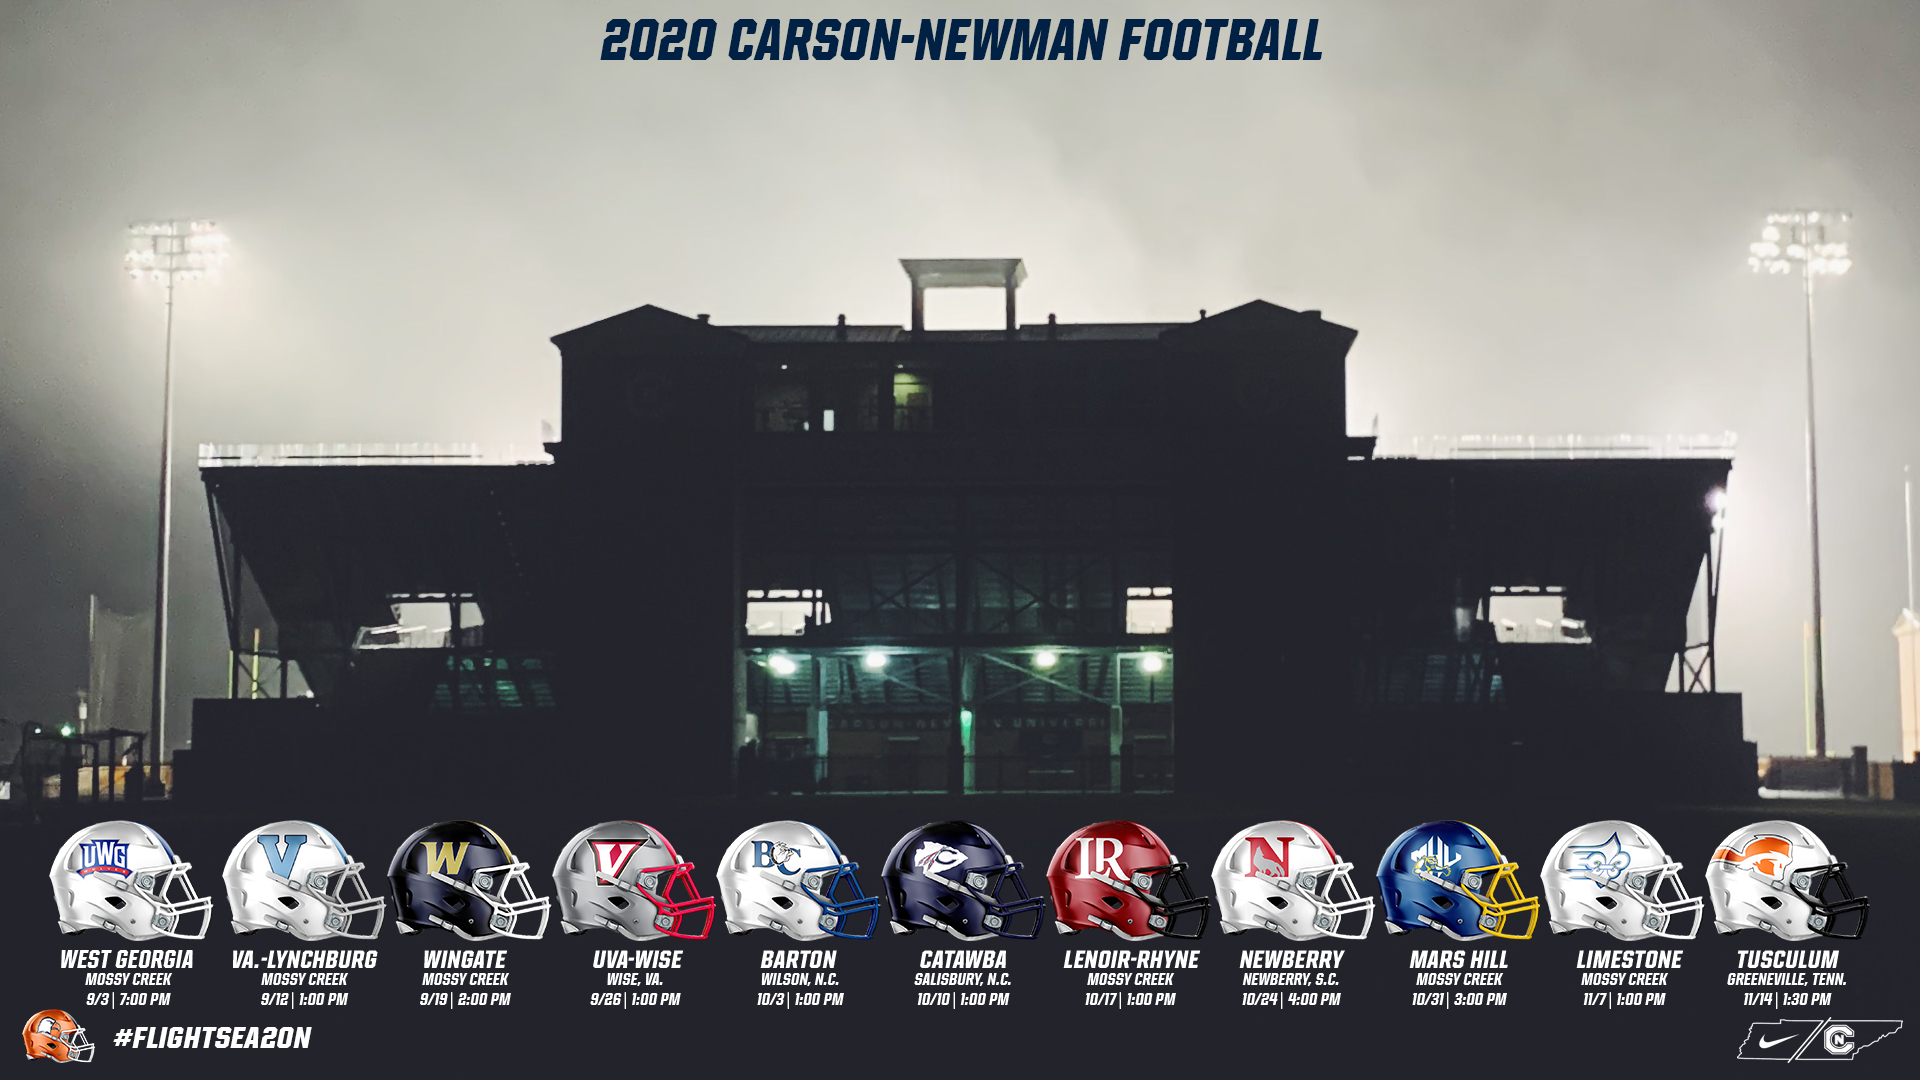 Clowney unveils 2020 Carson-Newman football schedule